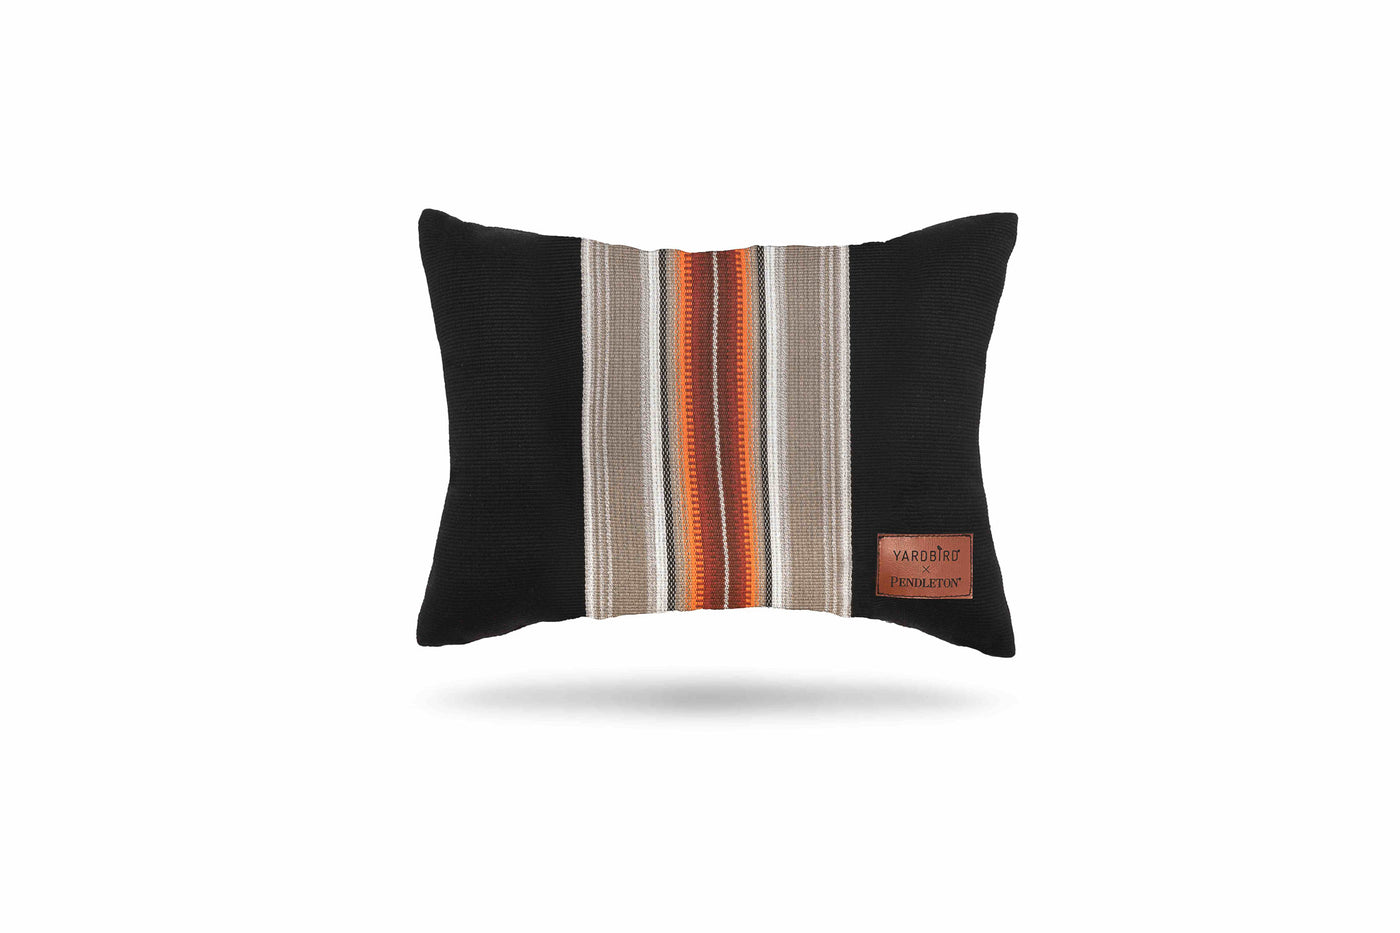 Yardbird x Pendleton® Serape Stripe Pillow